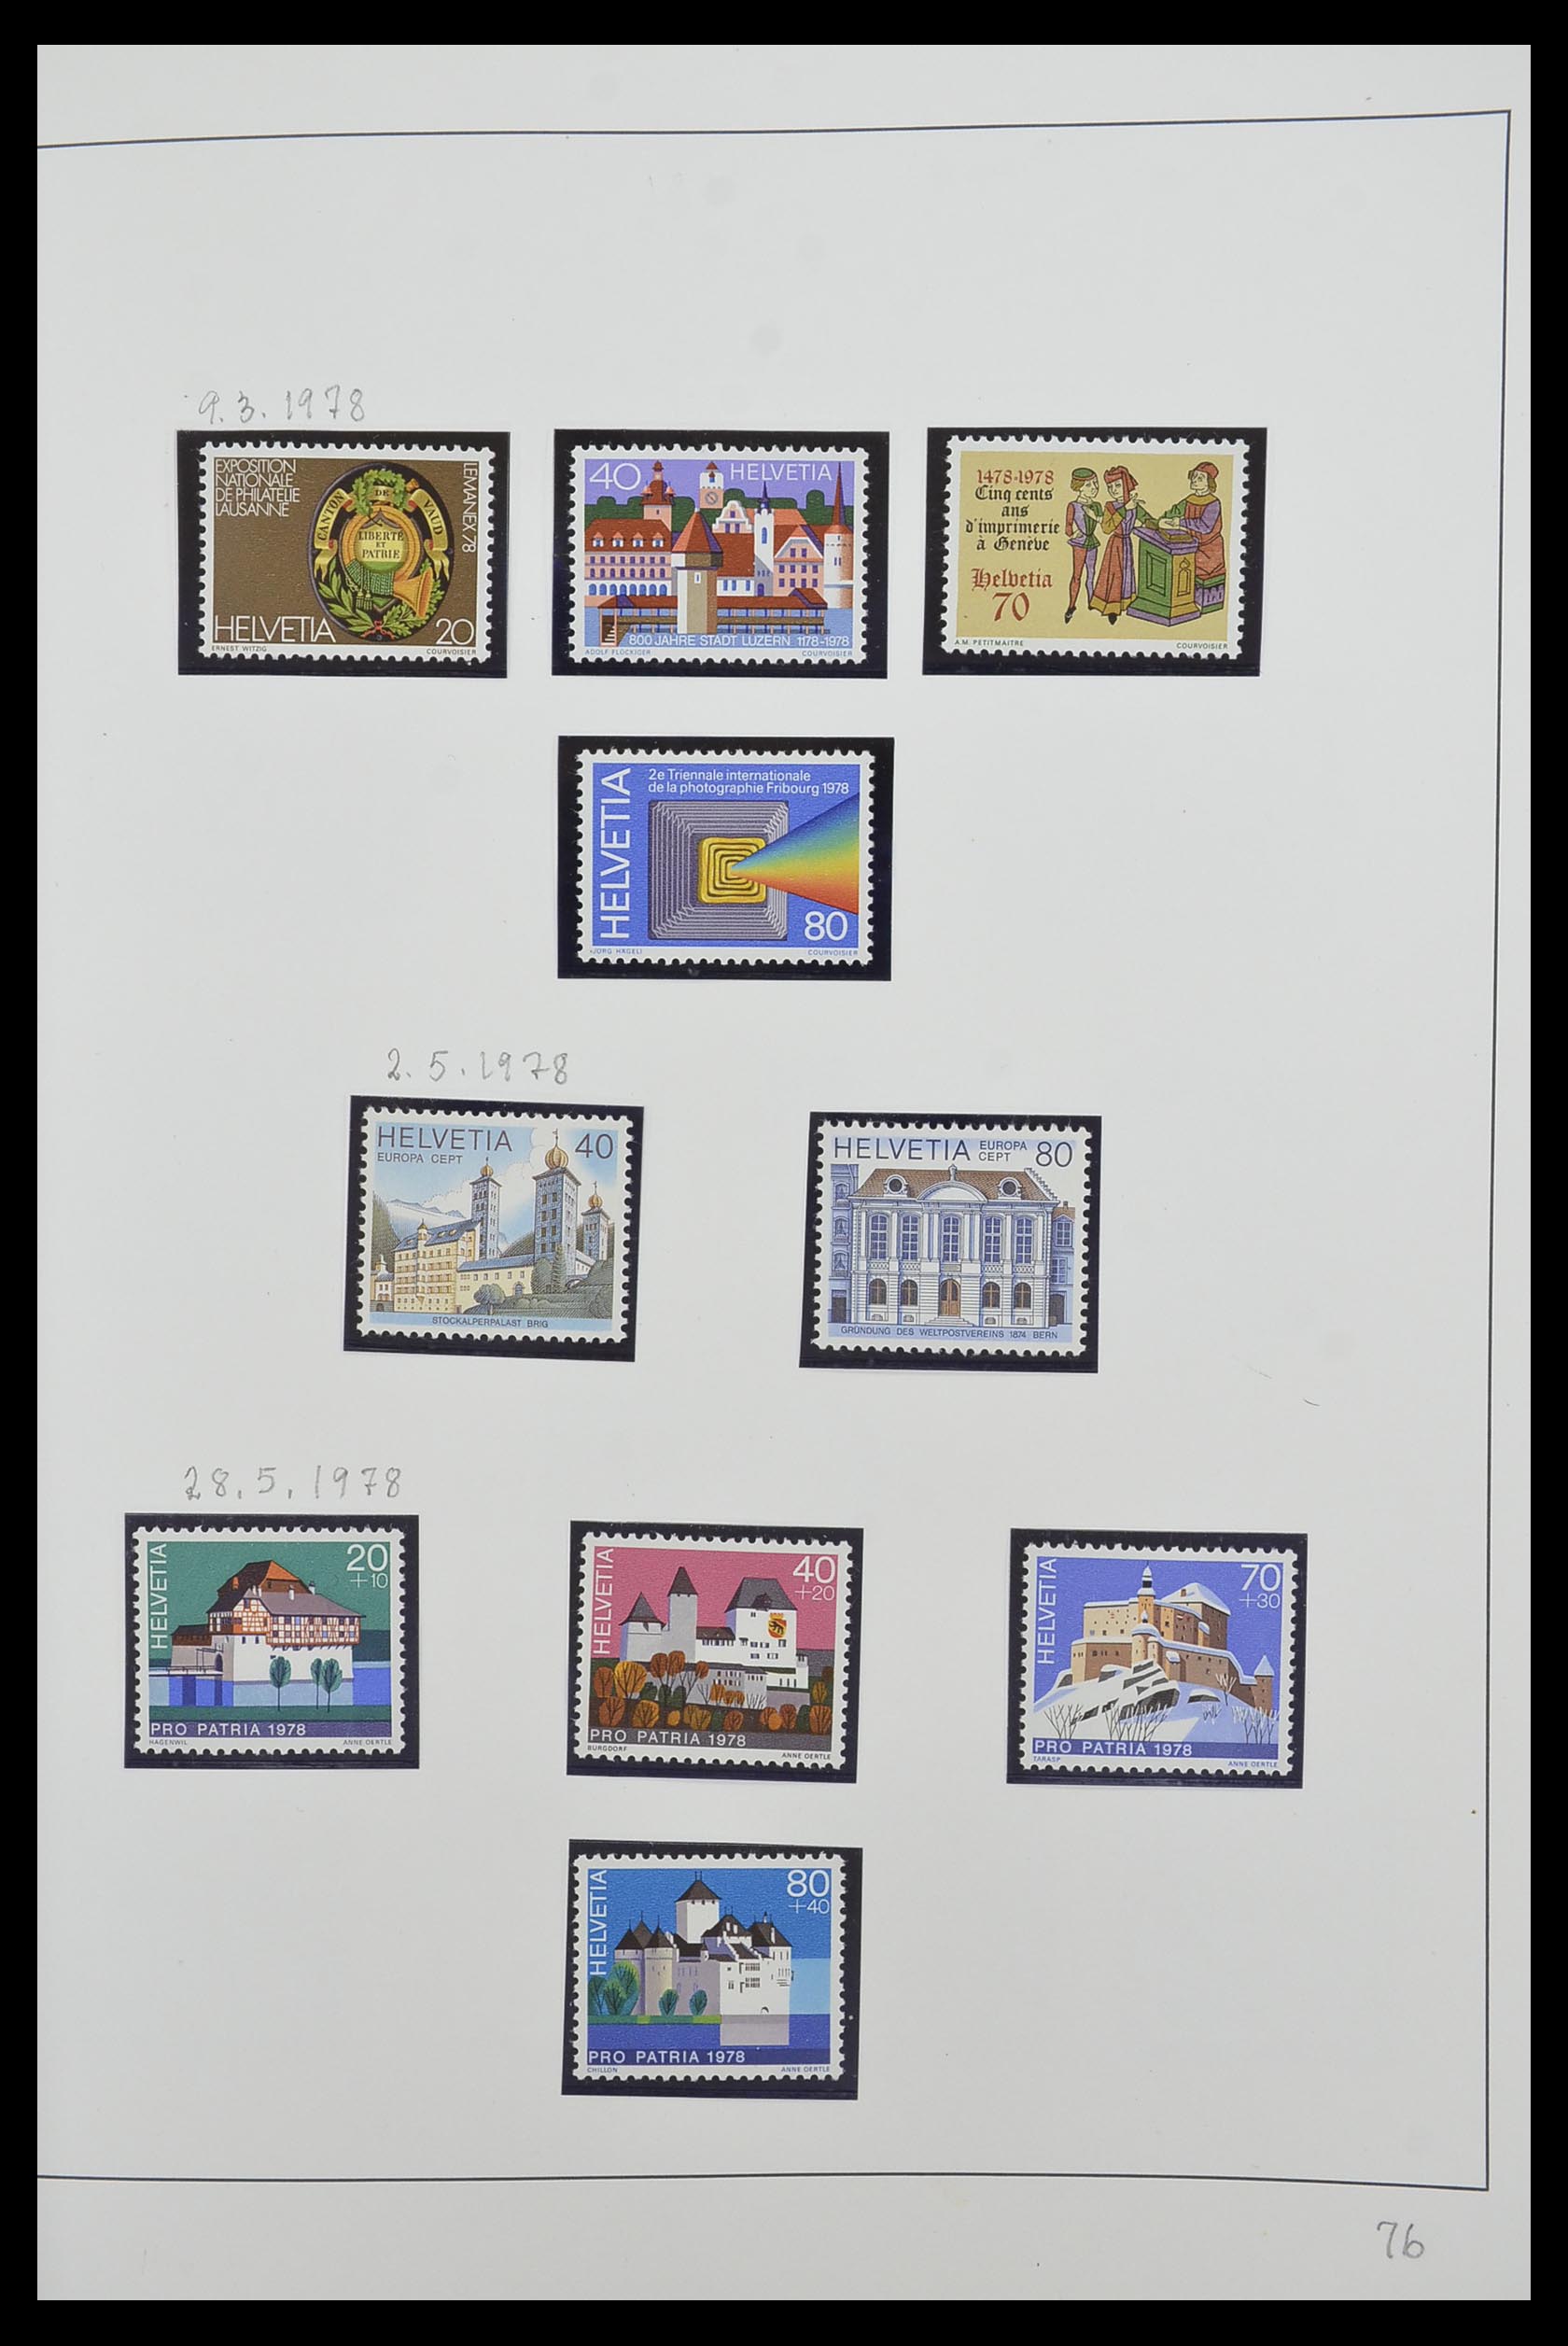 33556 077 - Stamp collection 33556 Switzerland 1862-2000.